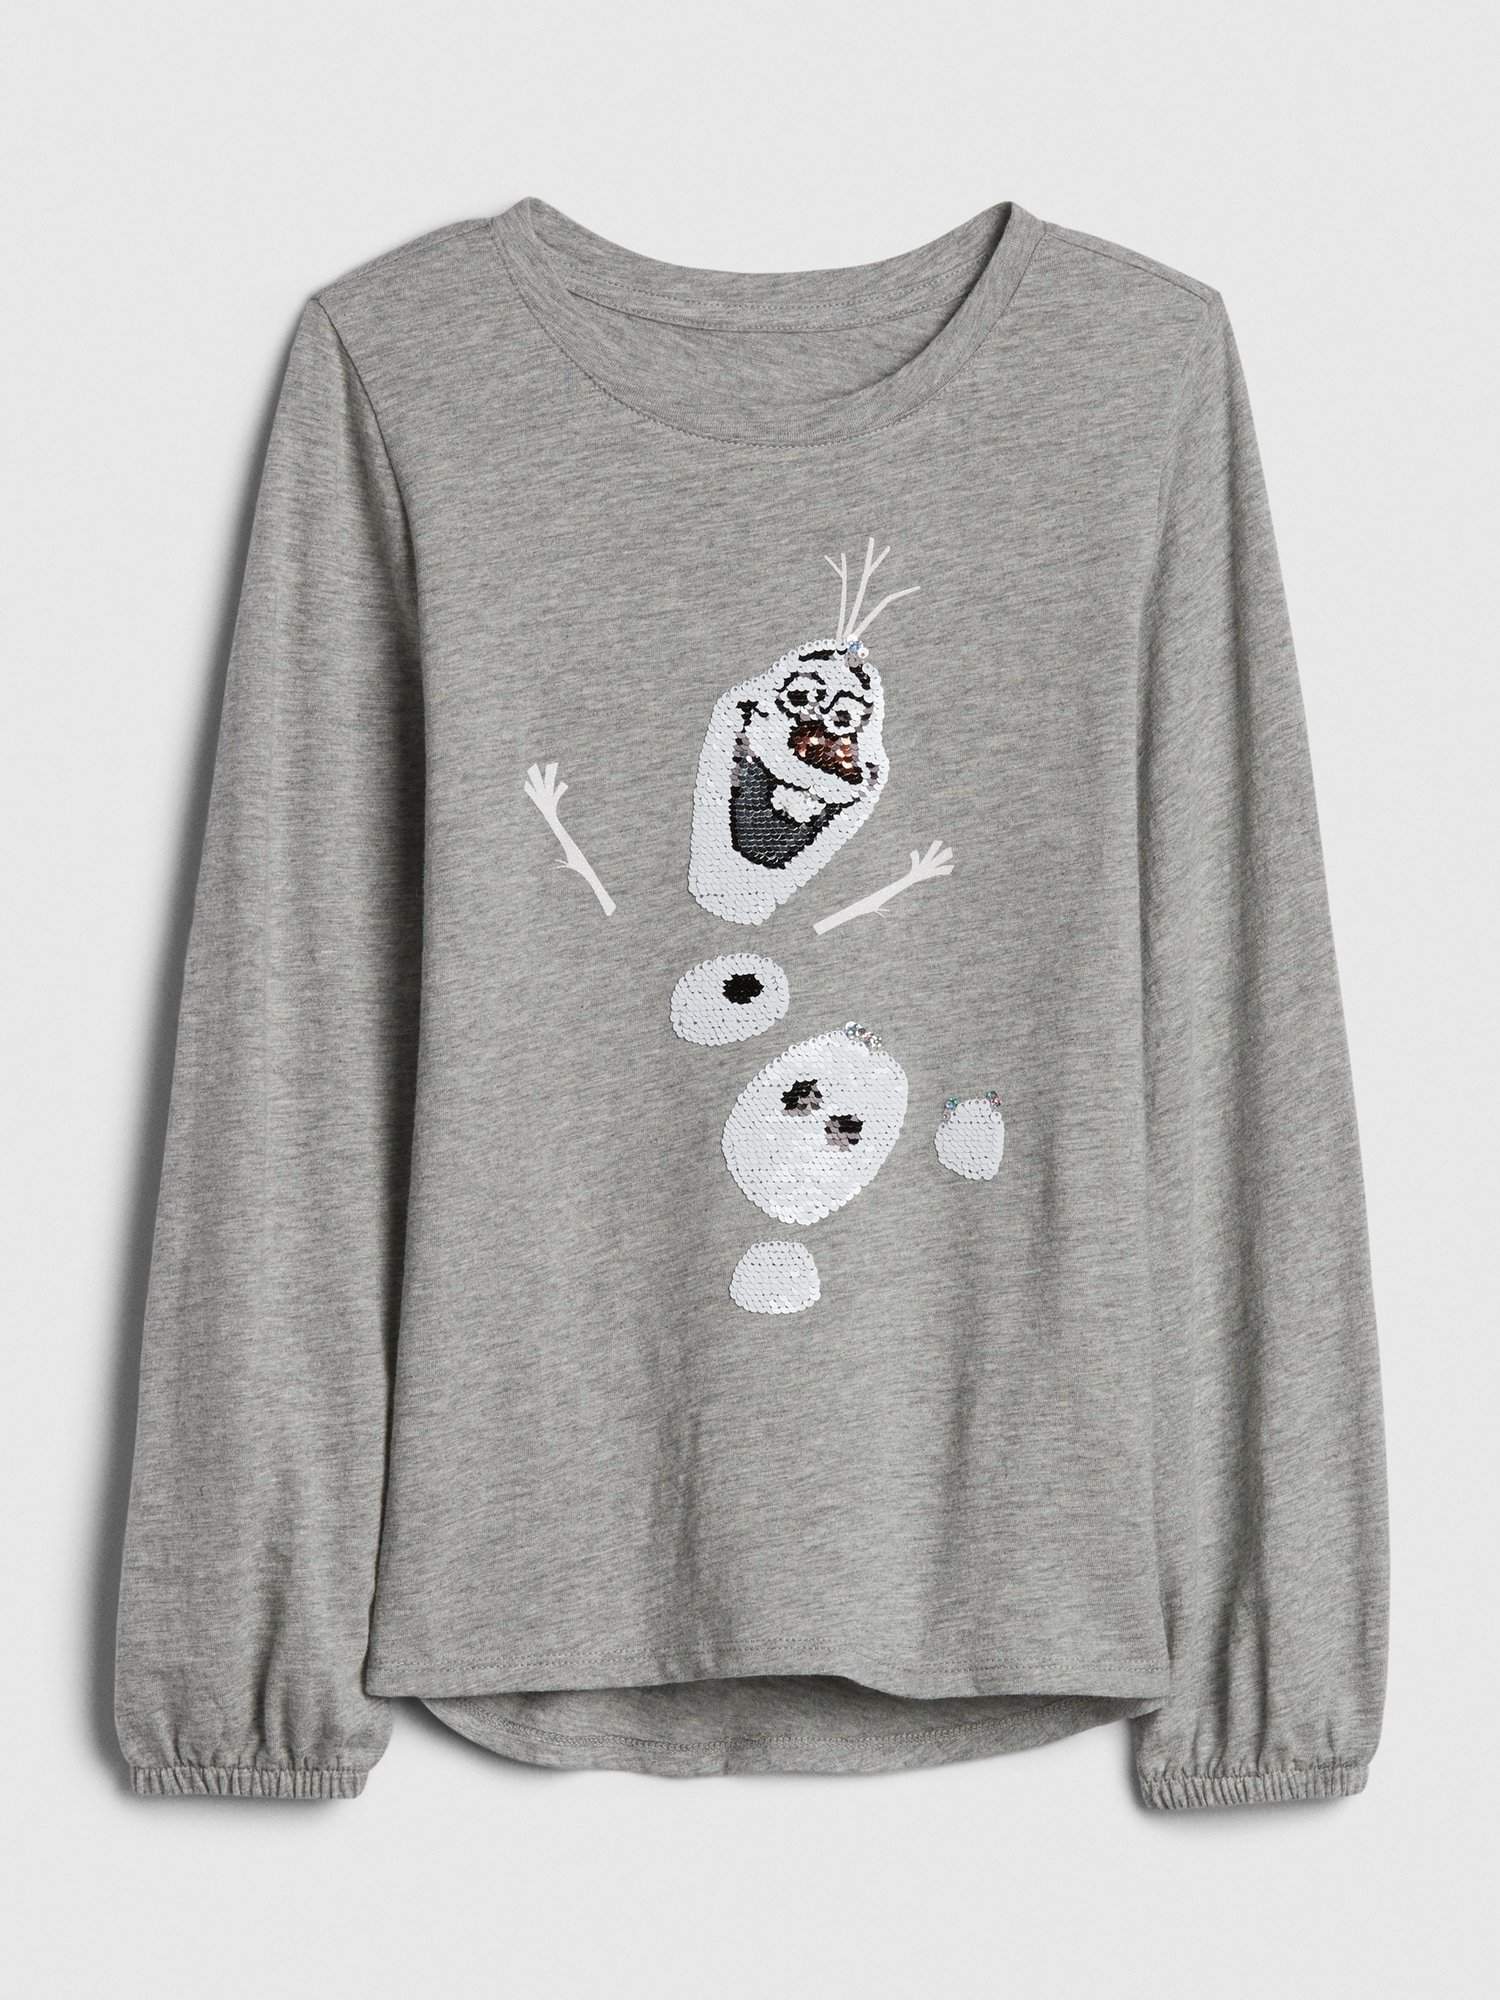 Disney Frozen Pullu T-Shirt product image